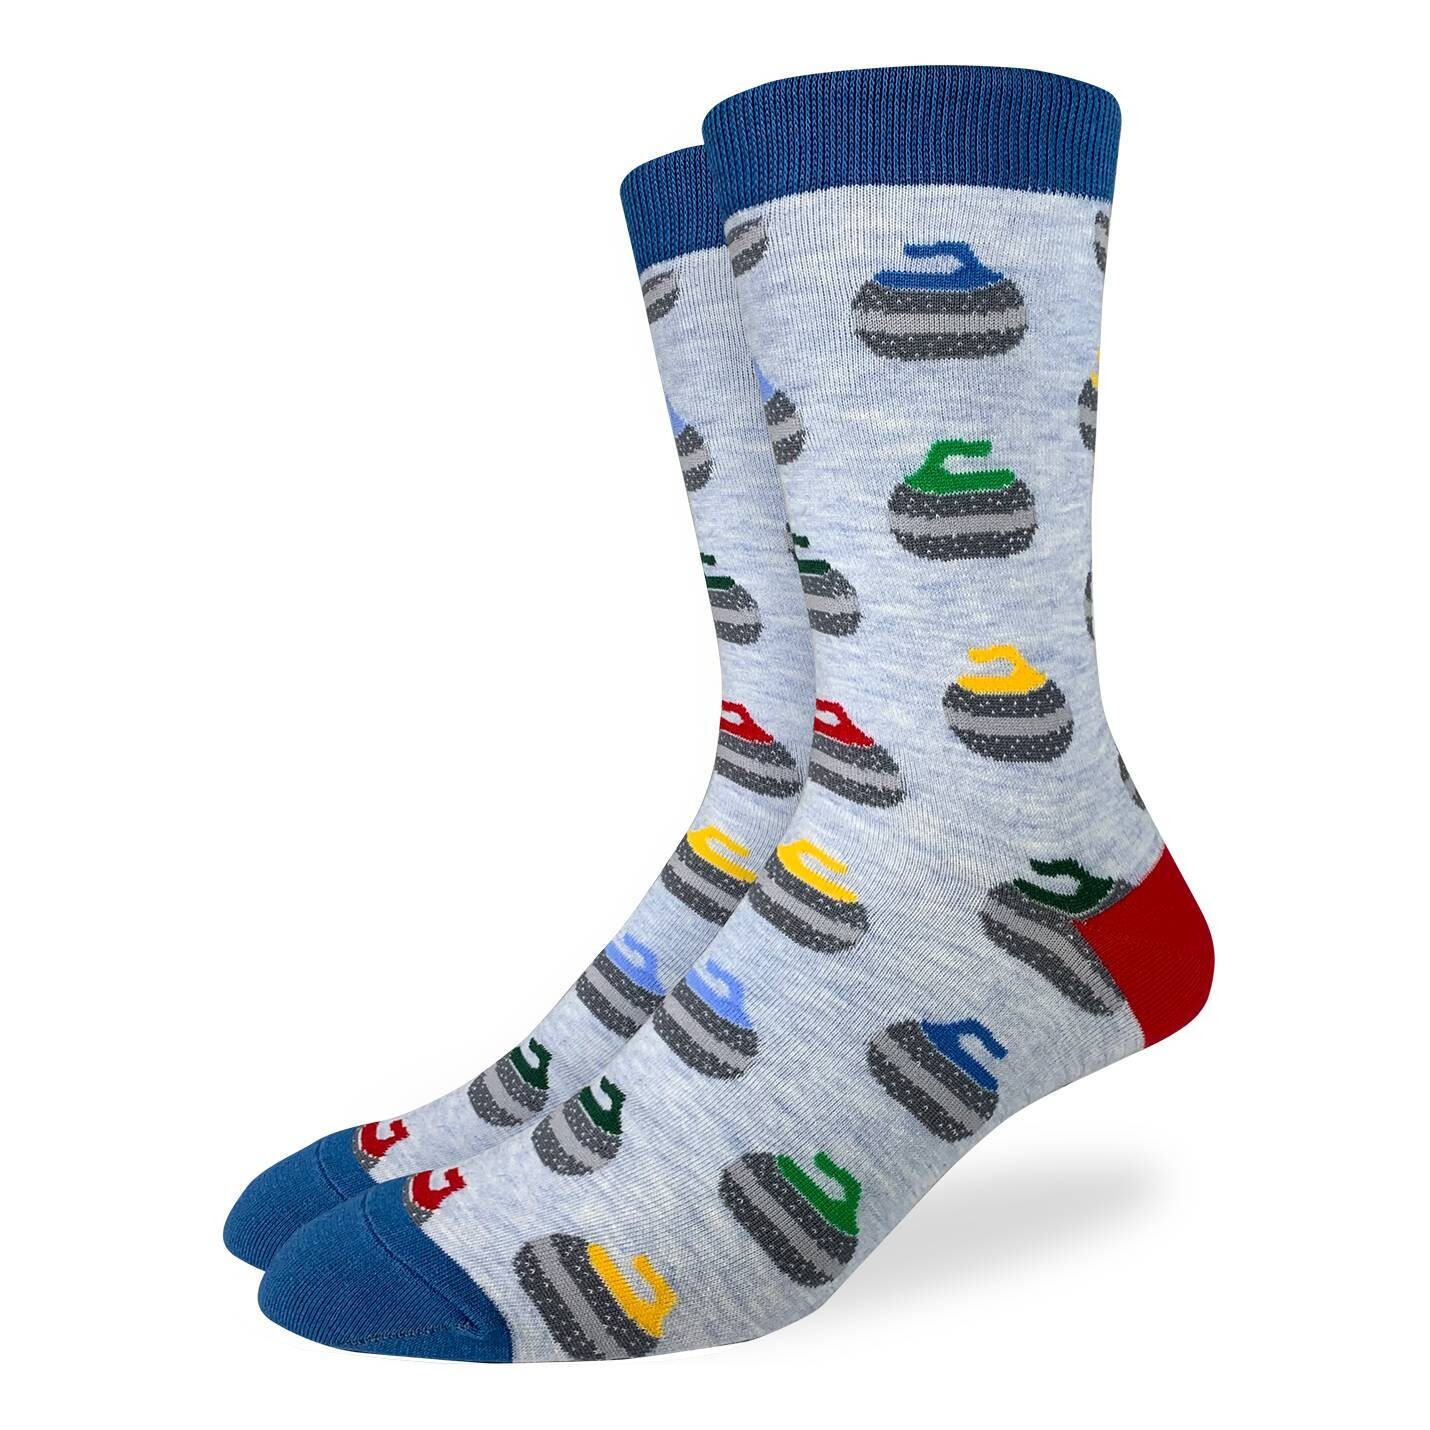 Curling Stones socks | M/L adult sizes | Good Luck Sock